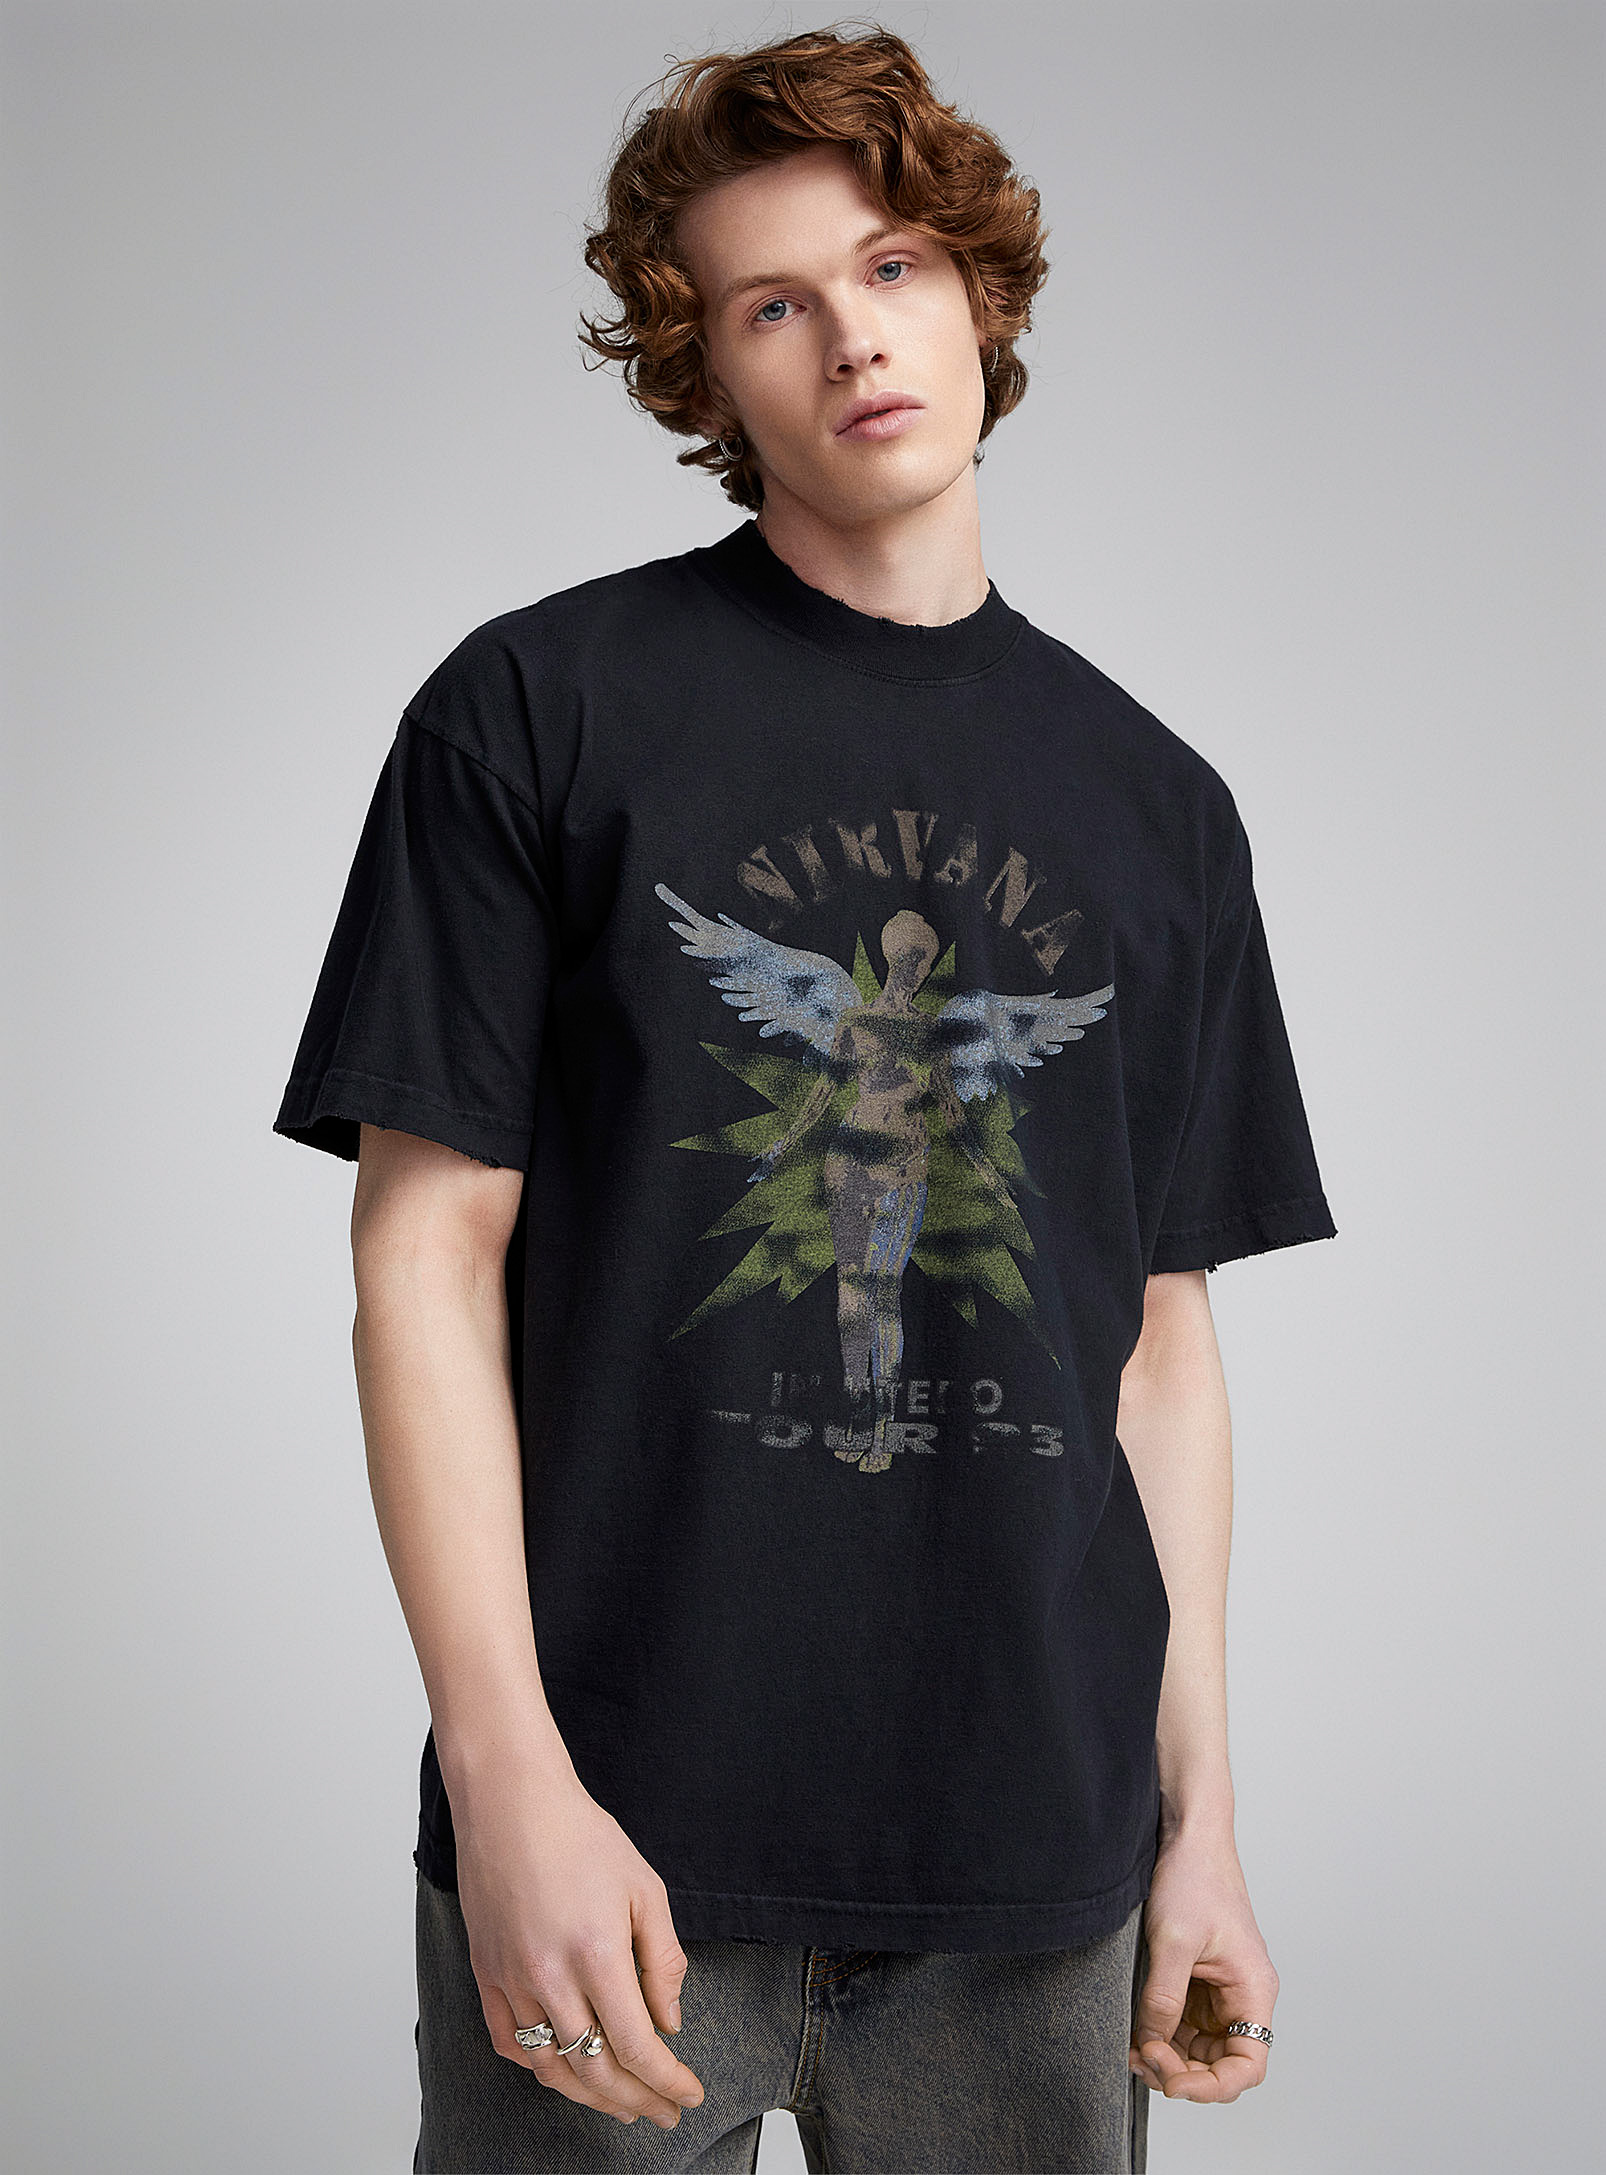 Djab - Le t-shirt Nirvana Utero